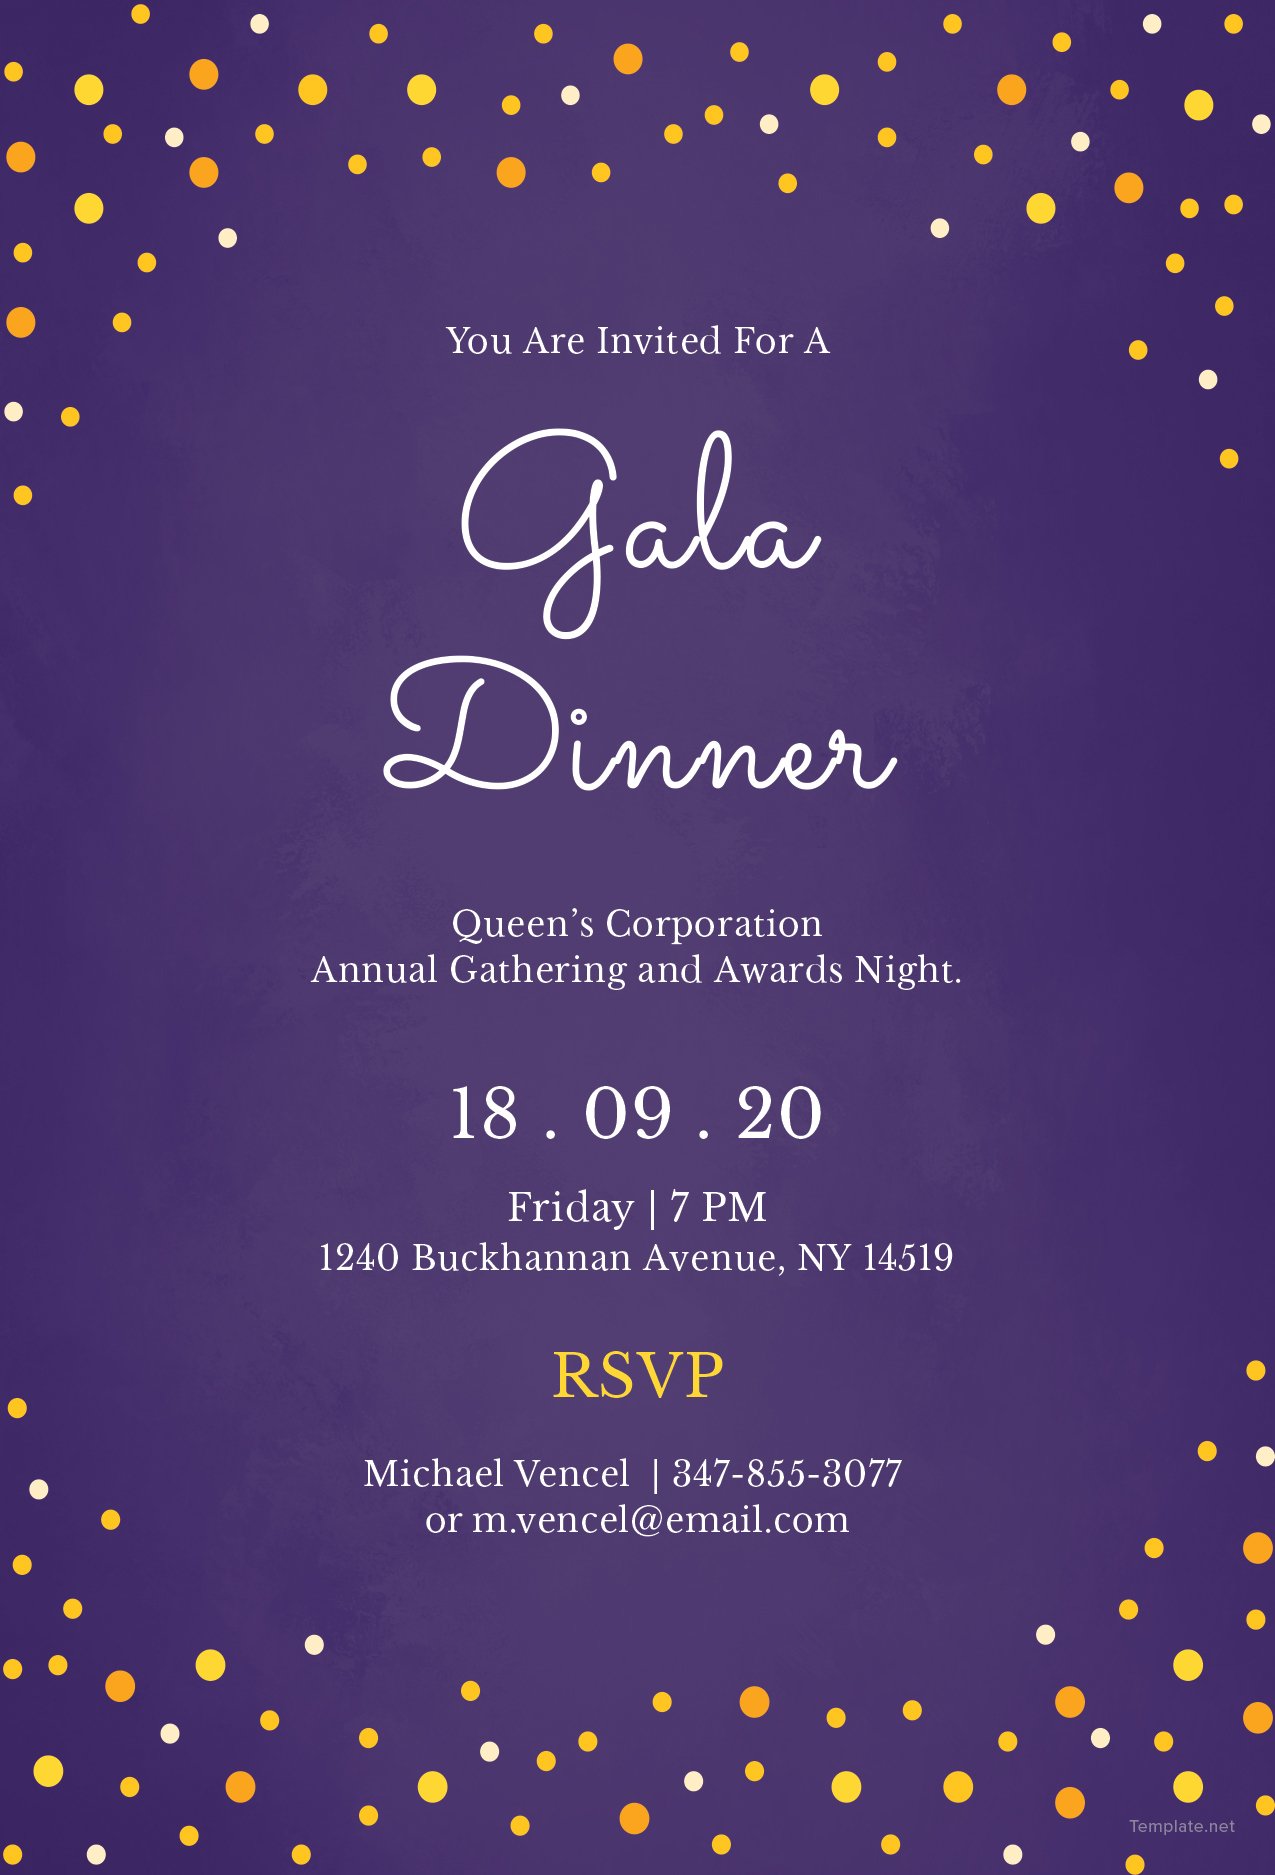 Free Gala Dinner Night Invitation Template in Illustrator | Template.net